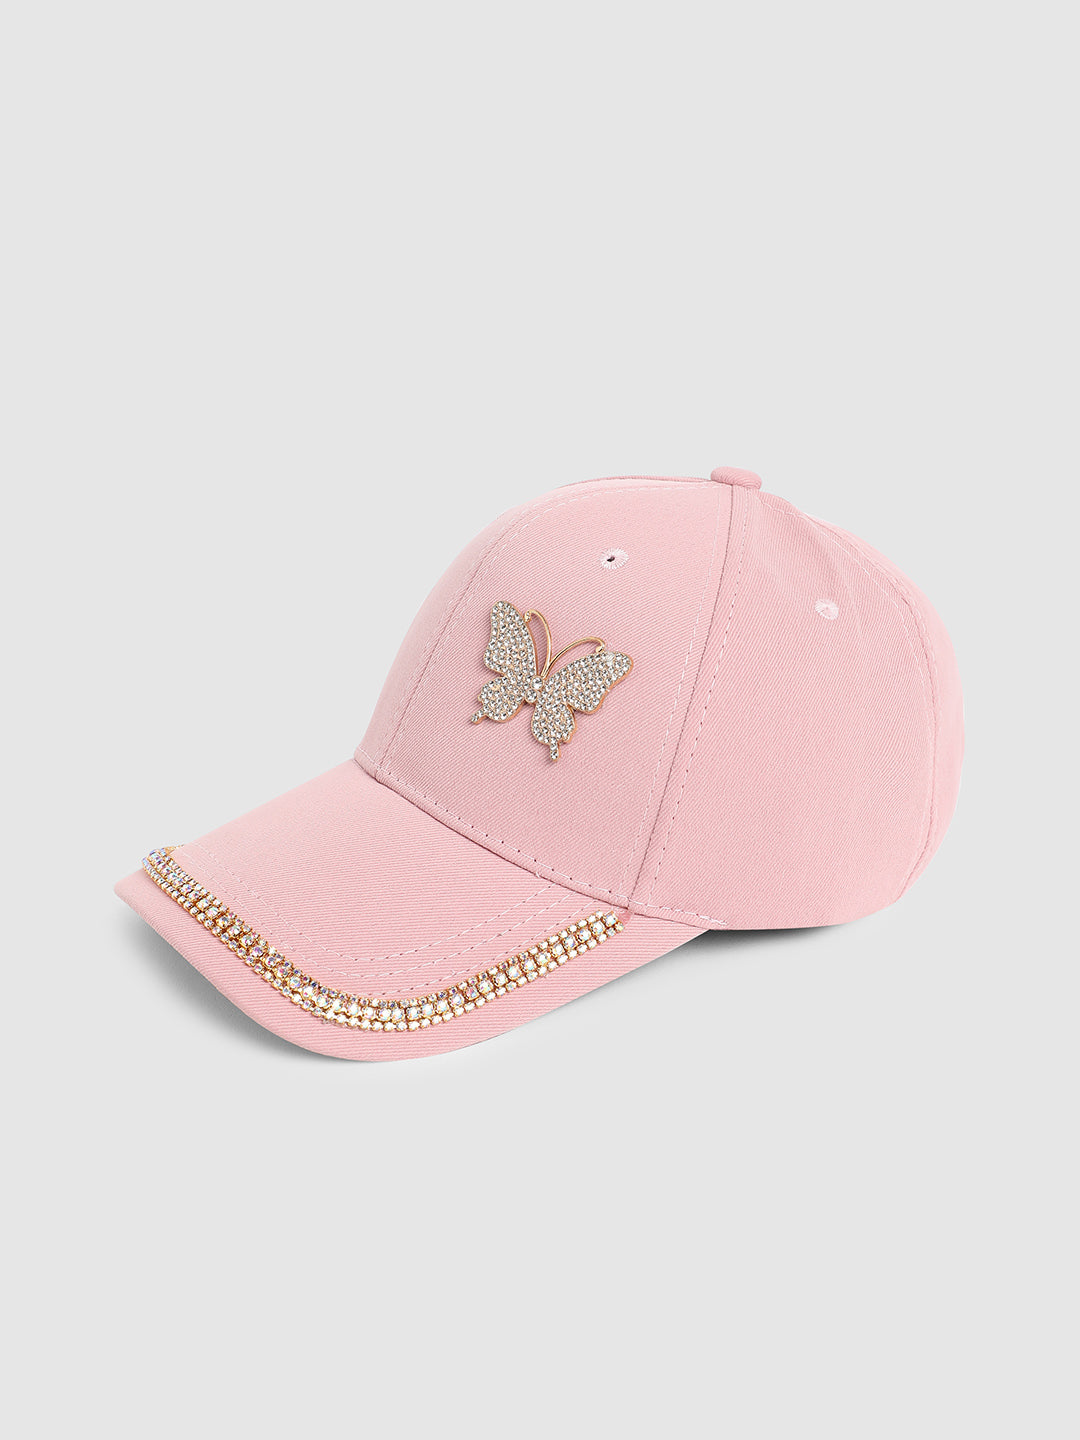 Rhinestone Butterfly Baseball Cap - Baby Pink